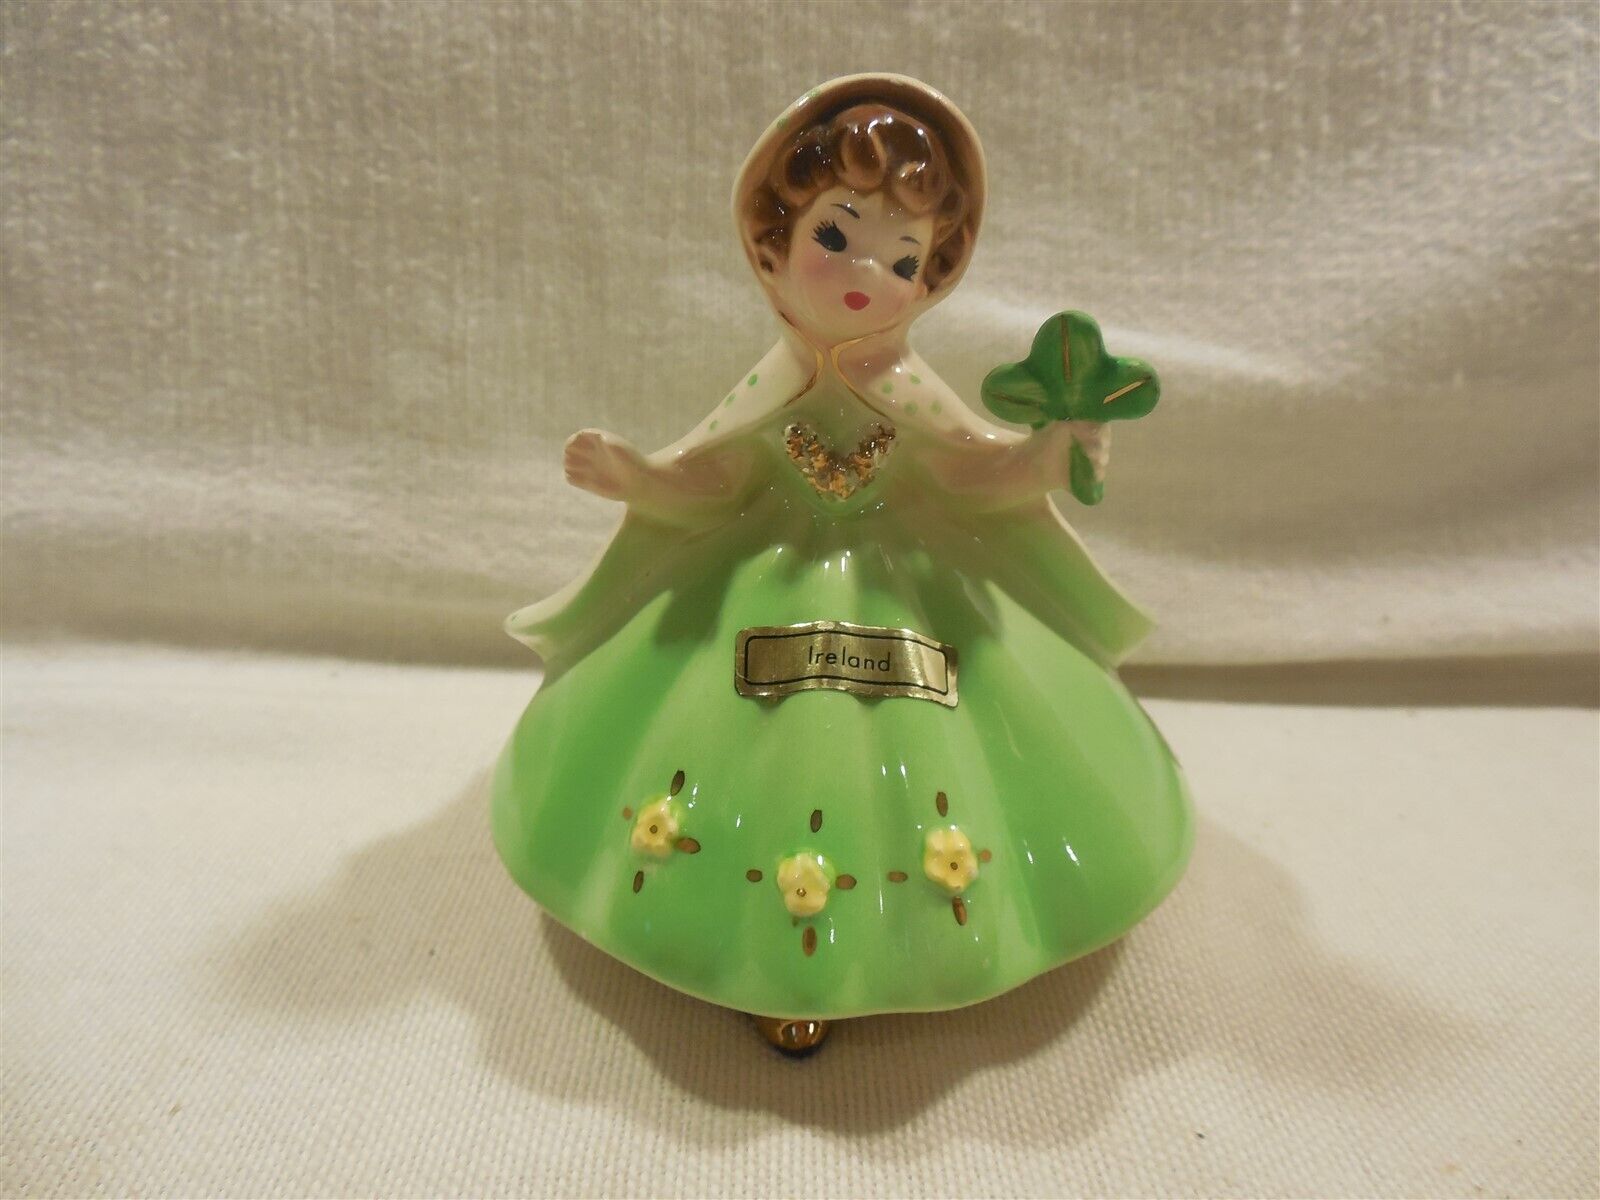 Vtg Josef Originals Japan Ceramic International Ireland Girl Figurine - Sm Chip